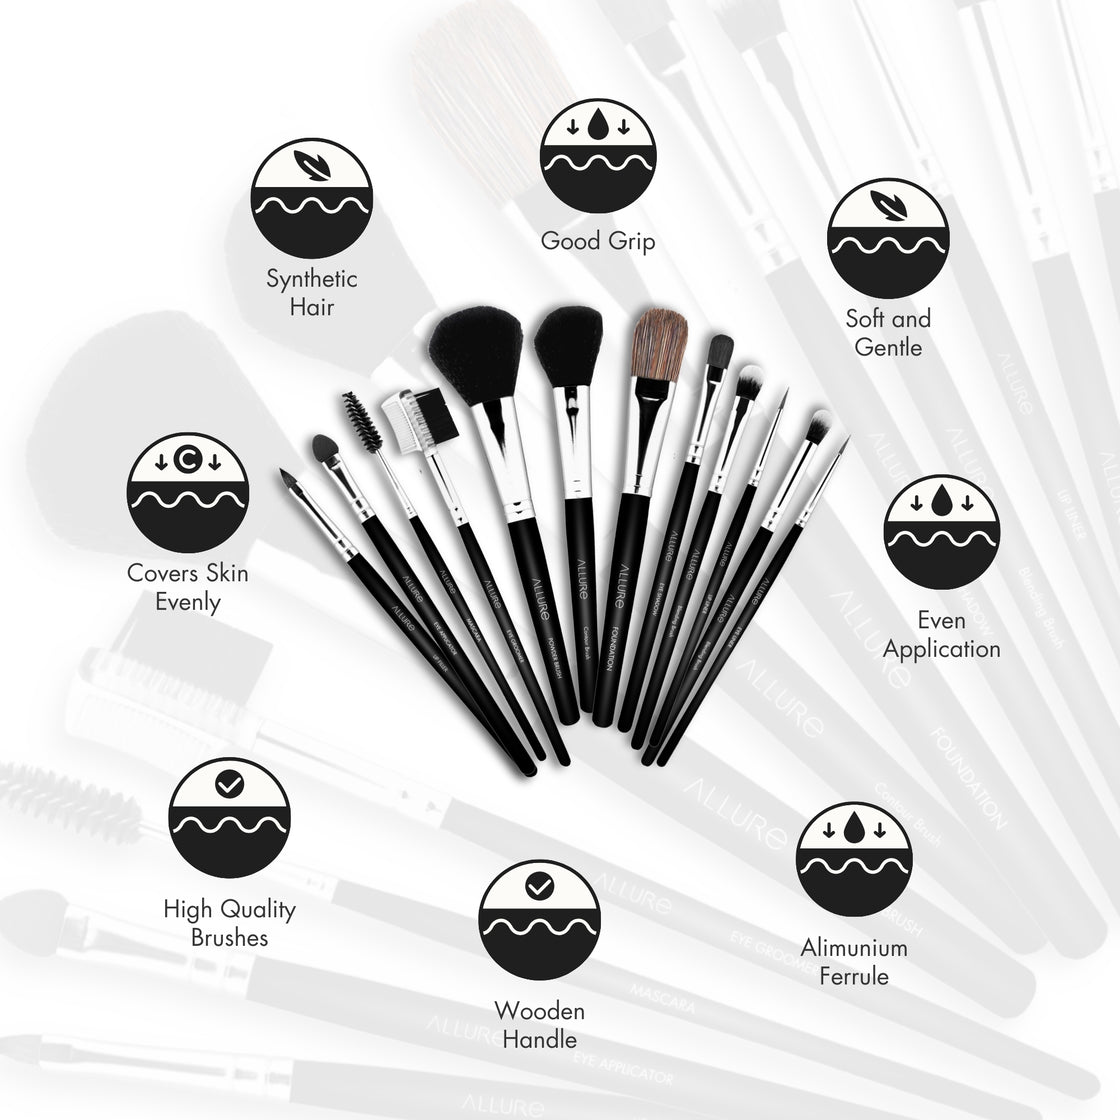 Allure Makeup Brush Set ( Pack of 12 ) MBS 12